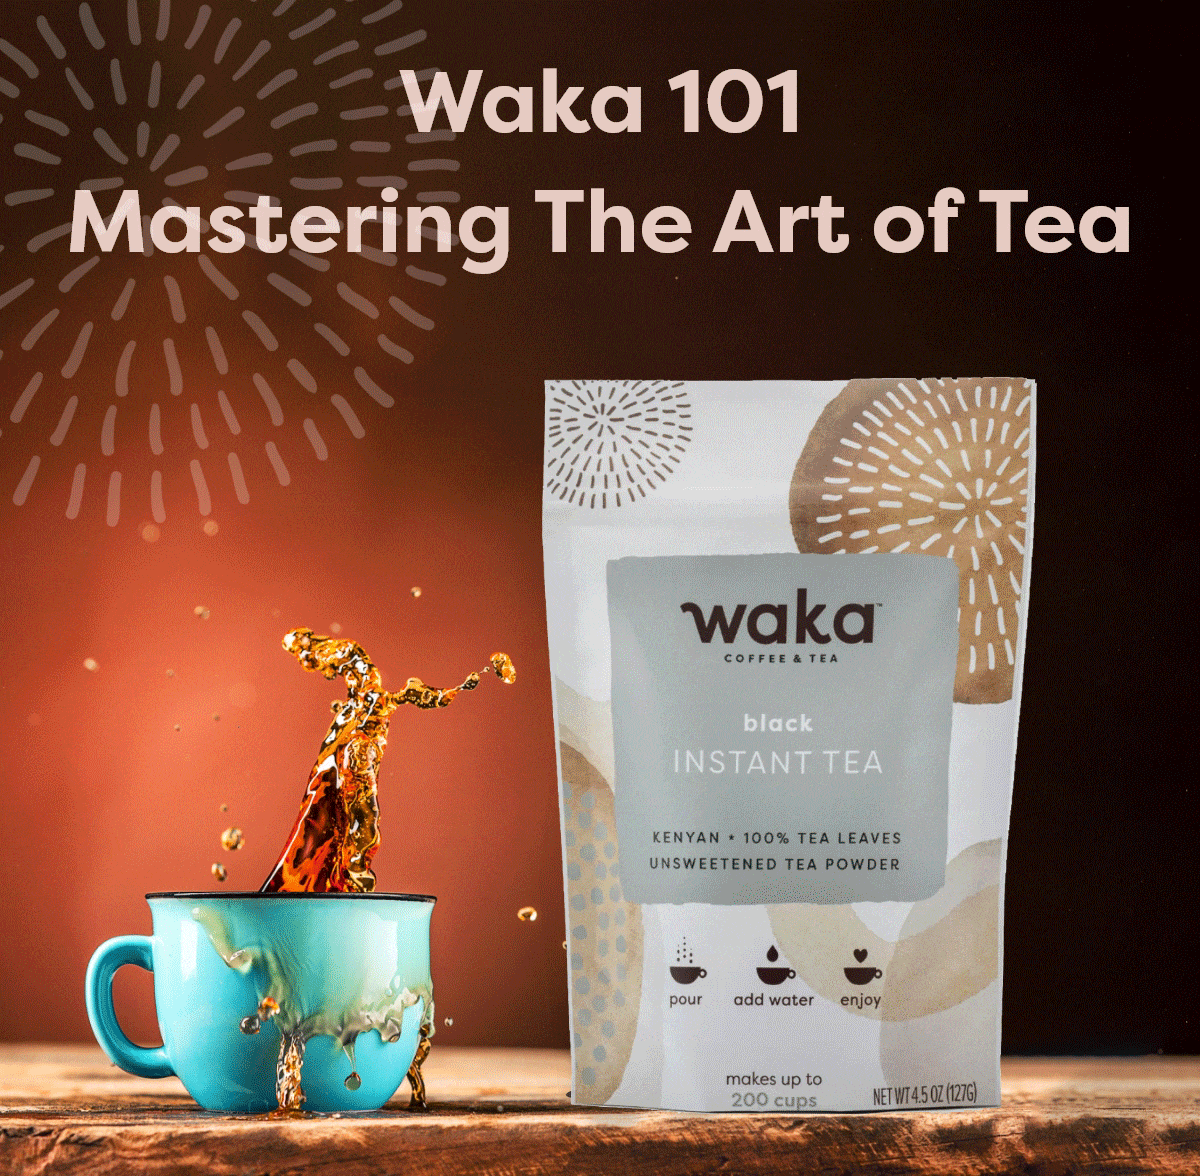 Waka 101 Mastering The Art of Tea